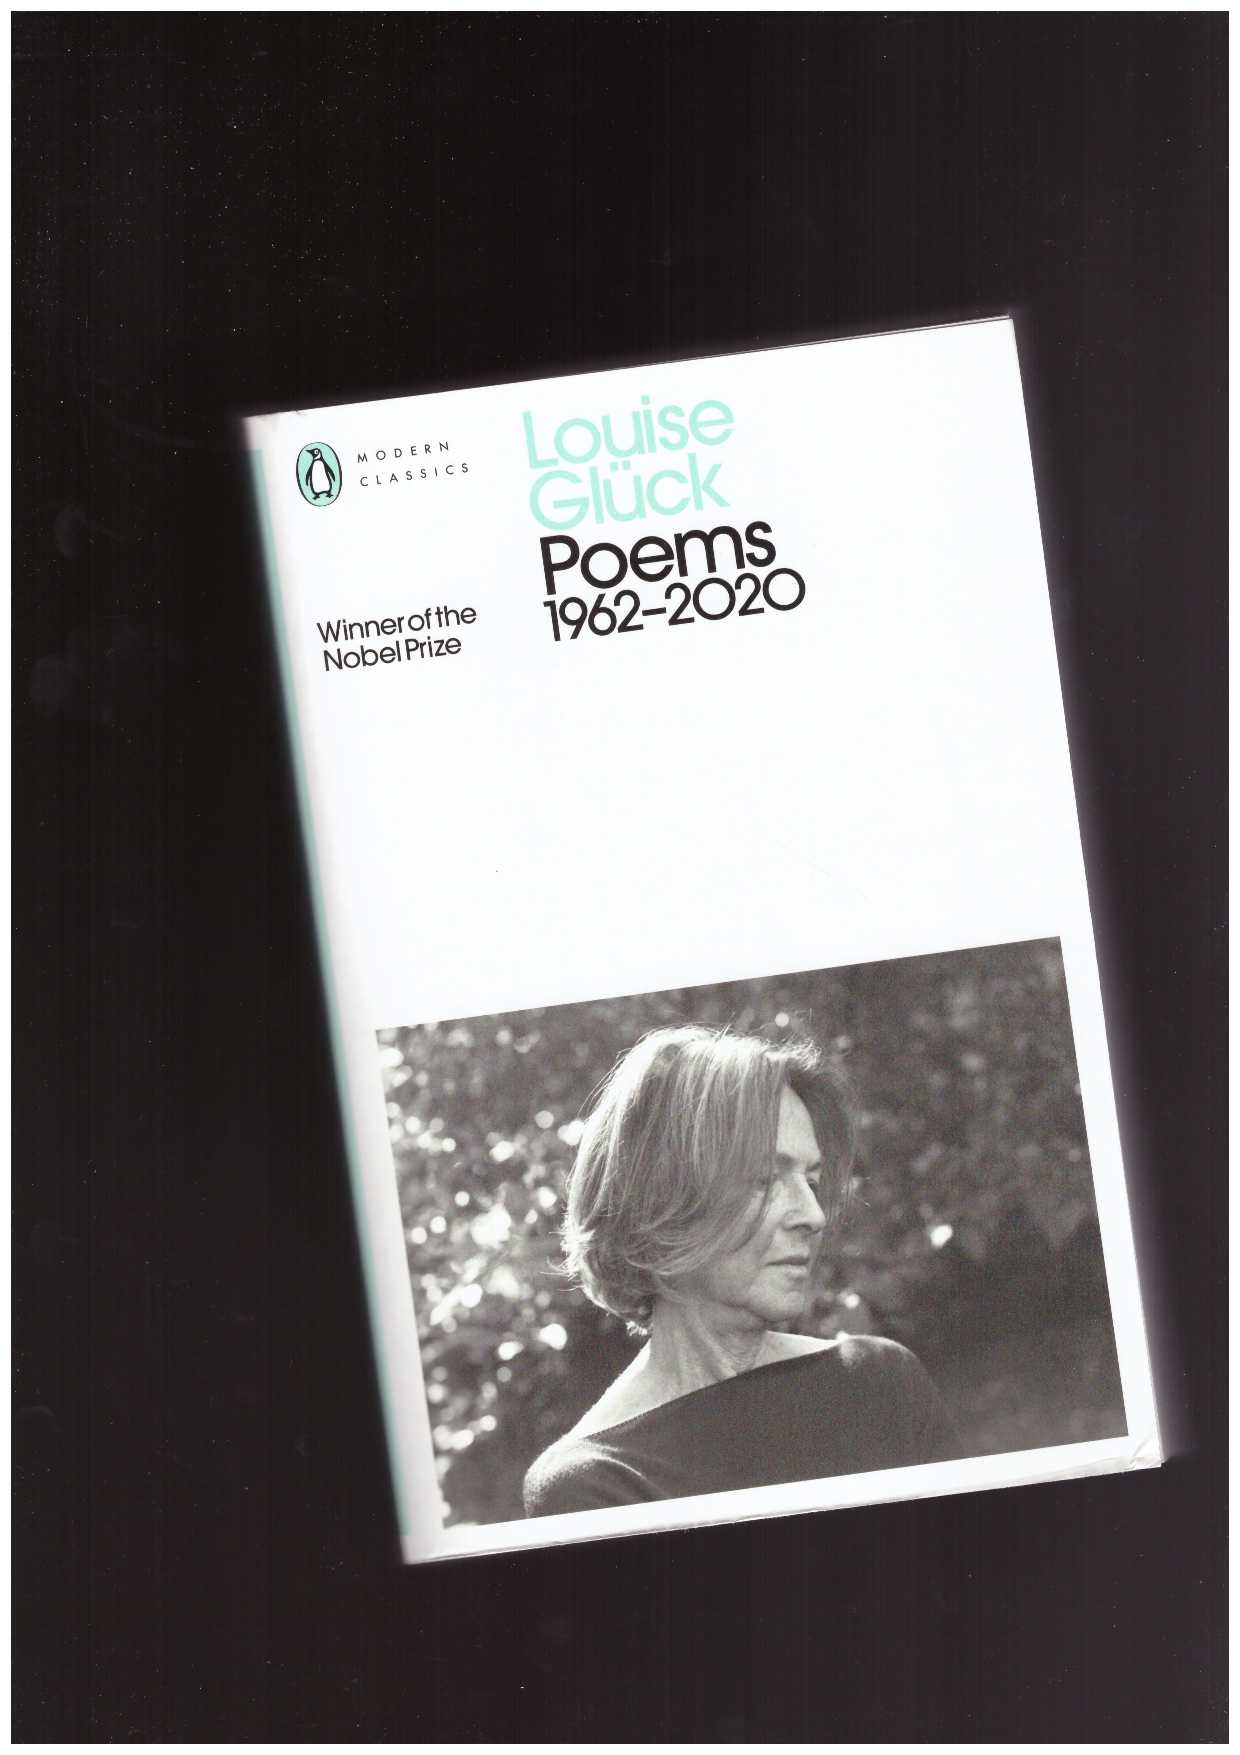 GLUCK, Louise - Louise Glück. Poems 1962-2020